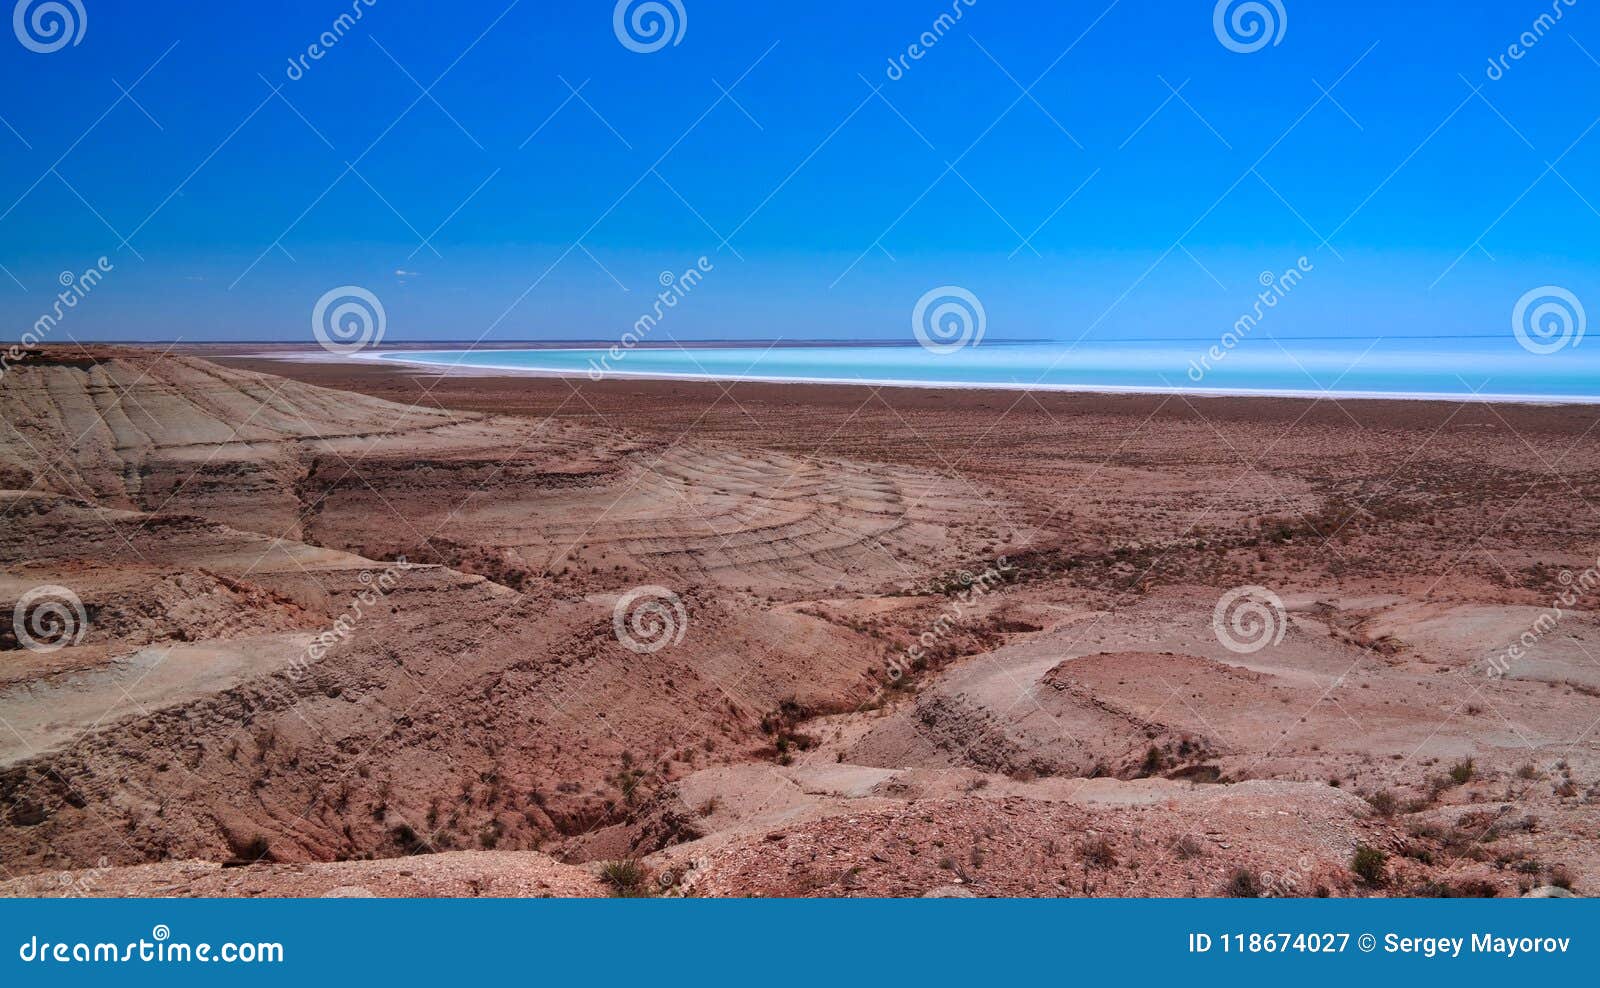 panorama view to saline barsa kelmes lake and ustyurt plateau in karakalpakstan, uzbekistan